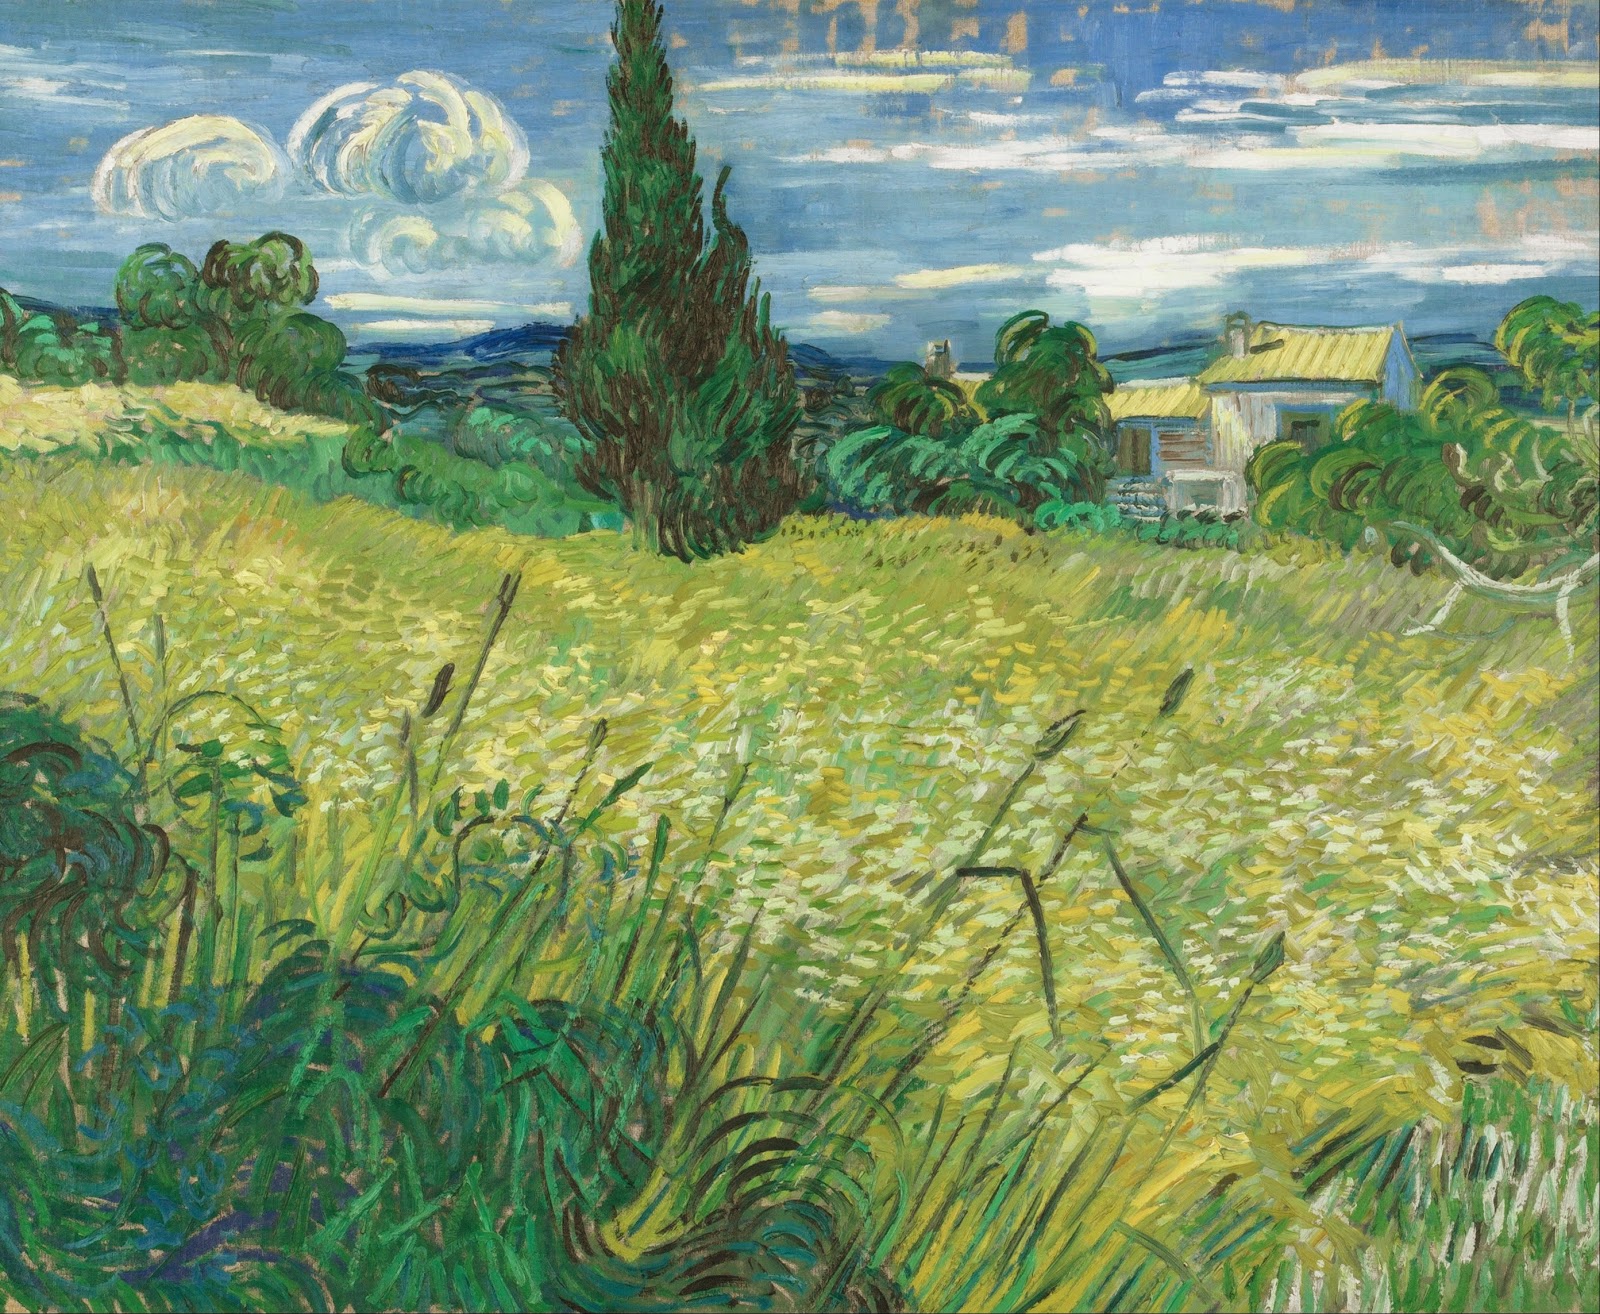 Vincent+Van+Gogh-1853-1890 (778).jpg